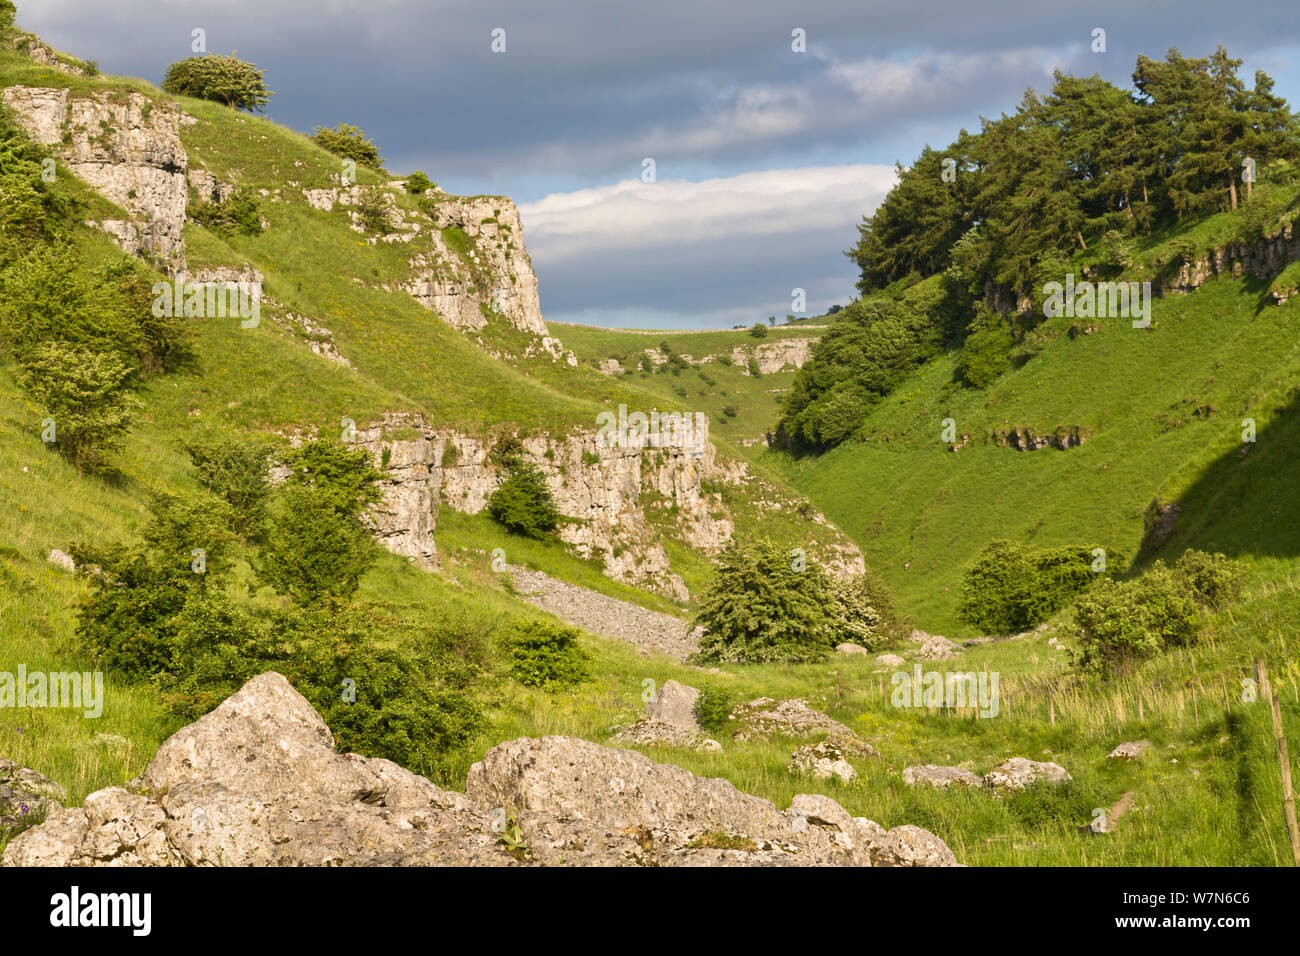 Carboniferous limestone outcrops. Lathkill Dale National Nature Reserve, Peak District National Park, UK, June 2008. Stock Photo